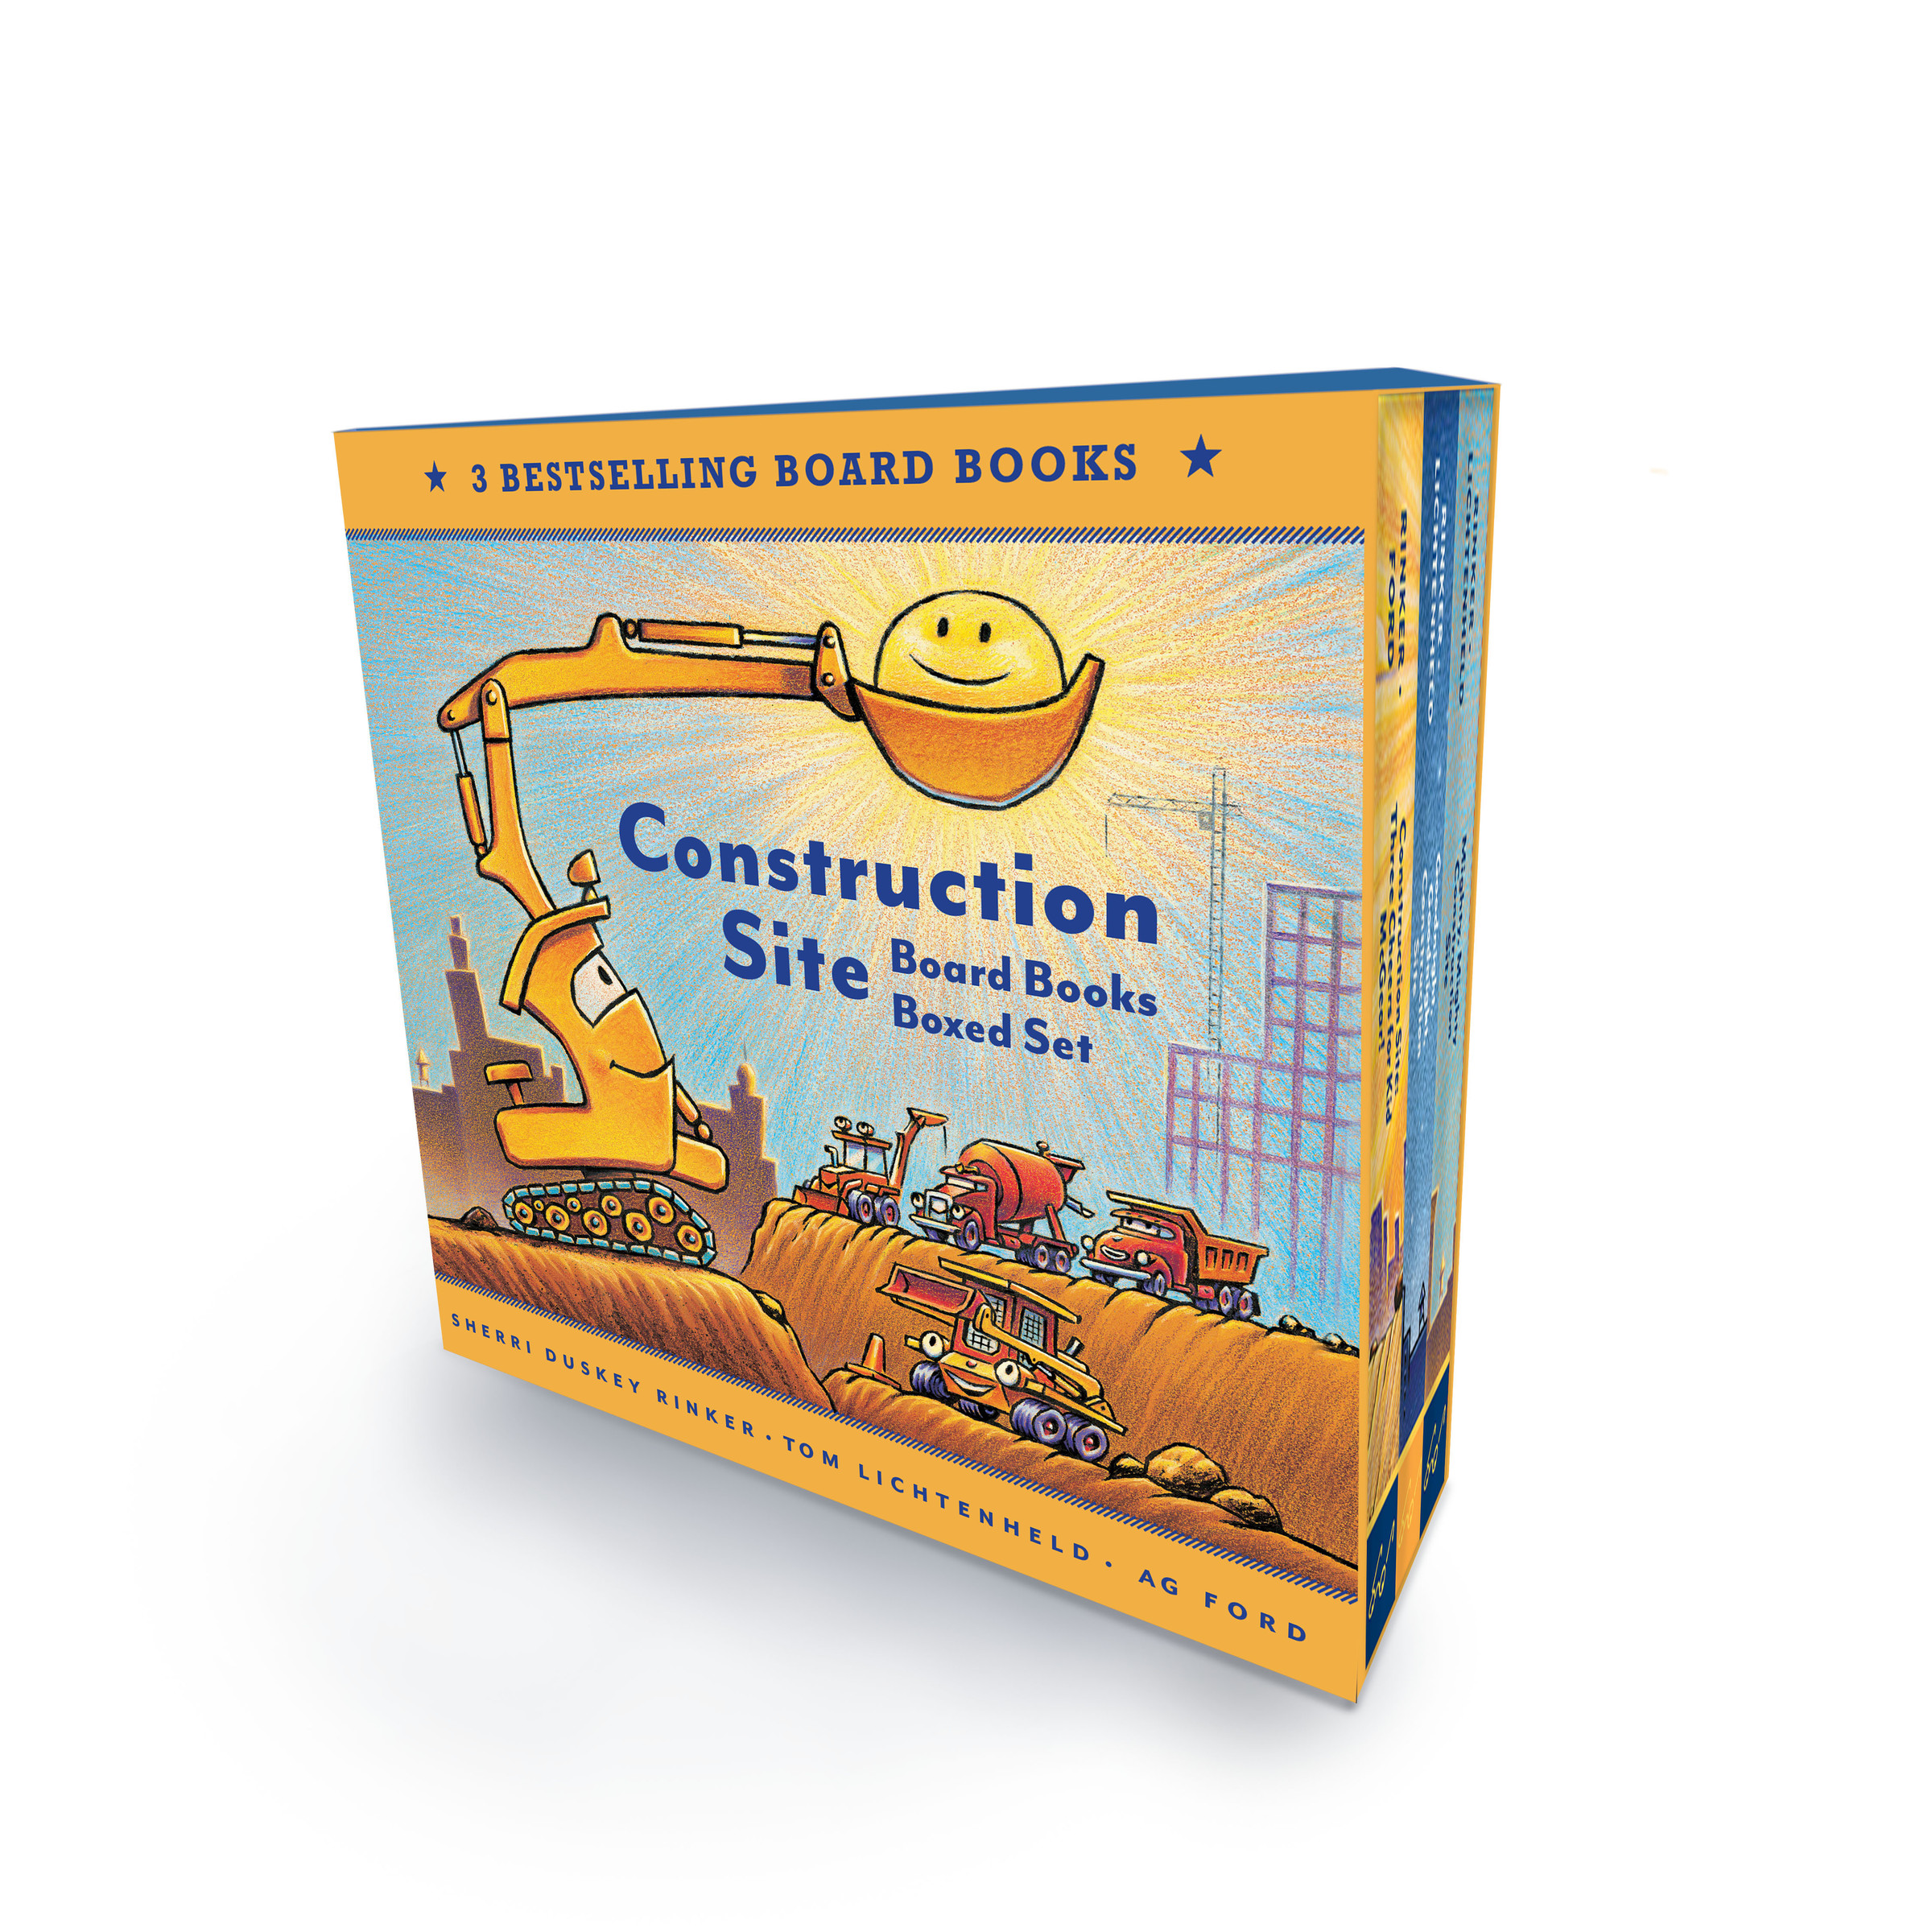 Construction Site Board Books Boxed Set | Rinker, Sherri Duskey (Auteur) | Lichtenheld, Tom (Illustrateur) | Ford, AG (Illustrateur)